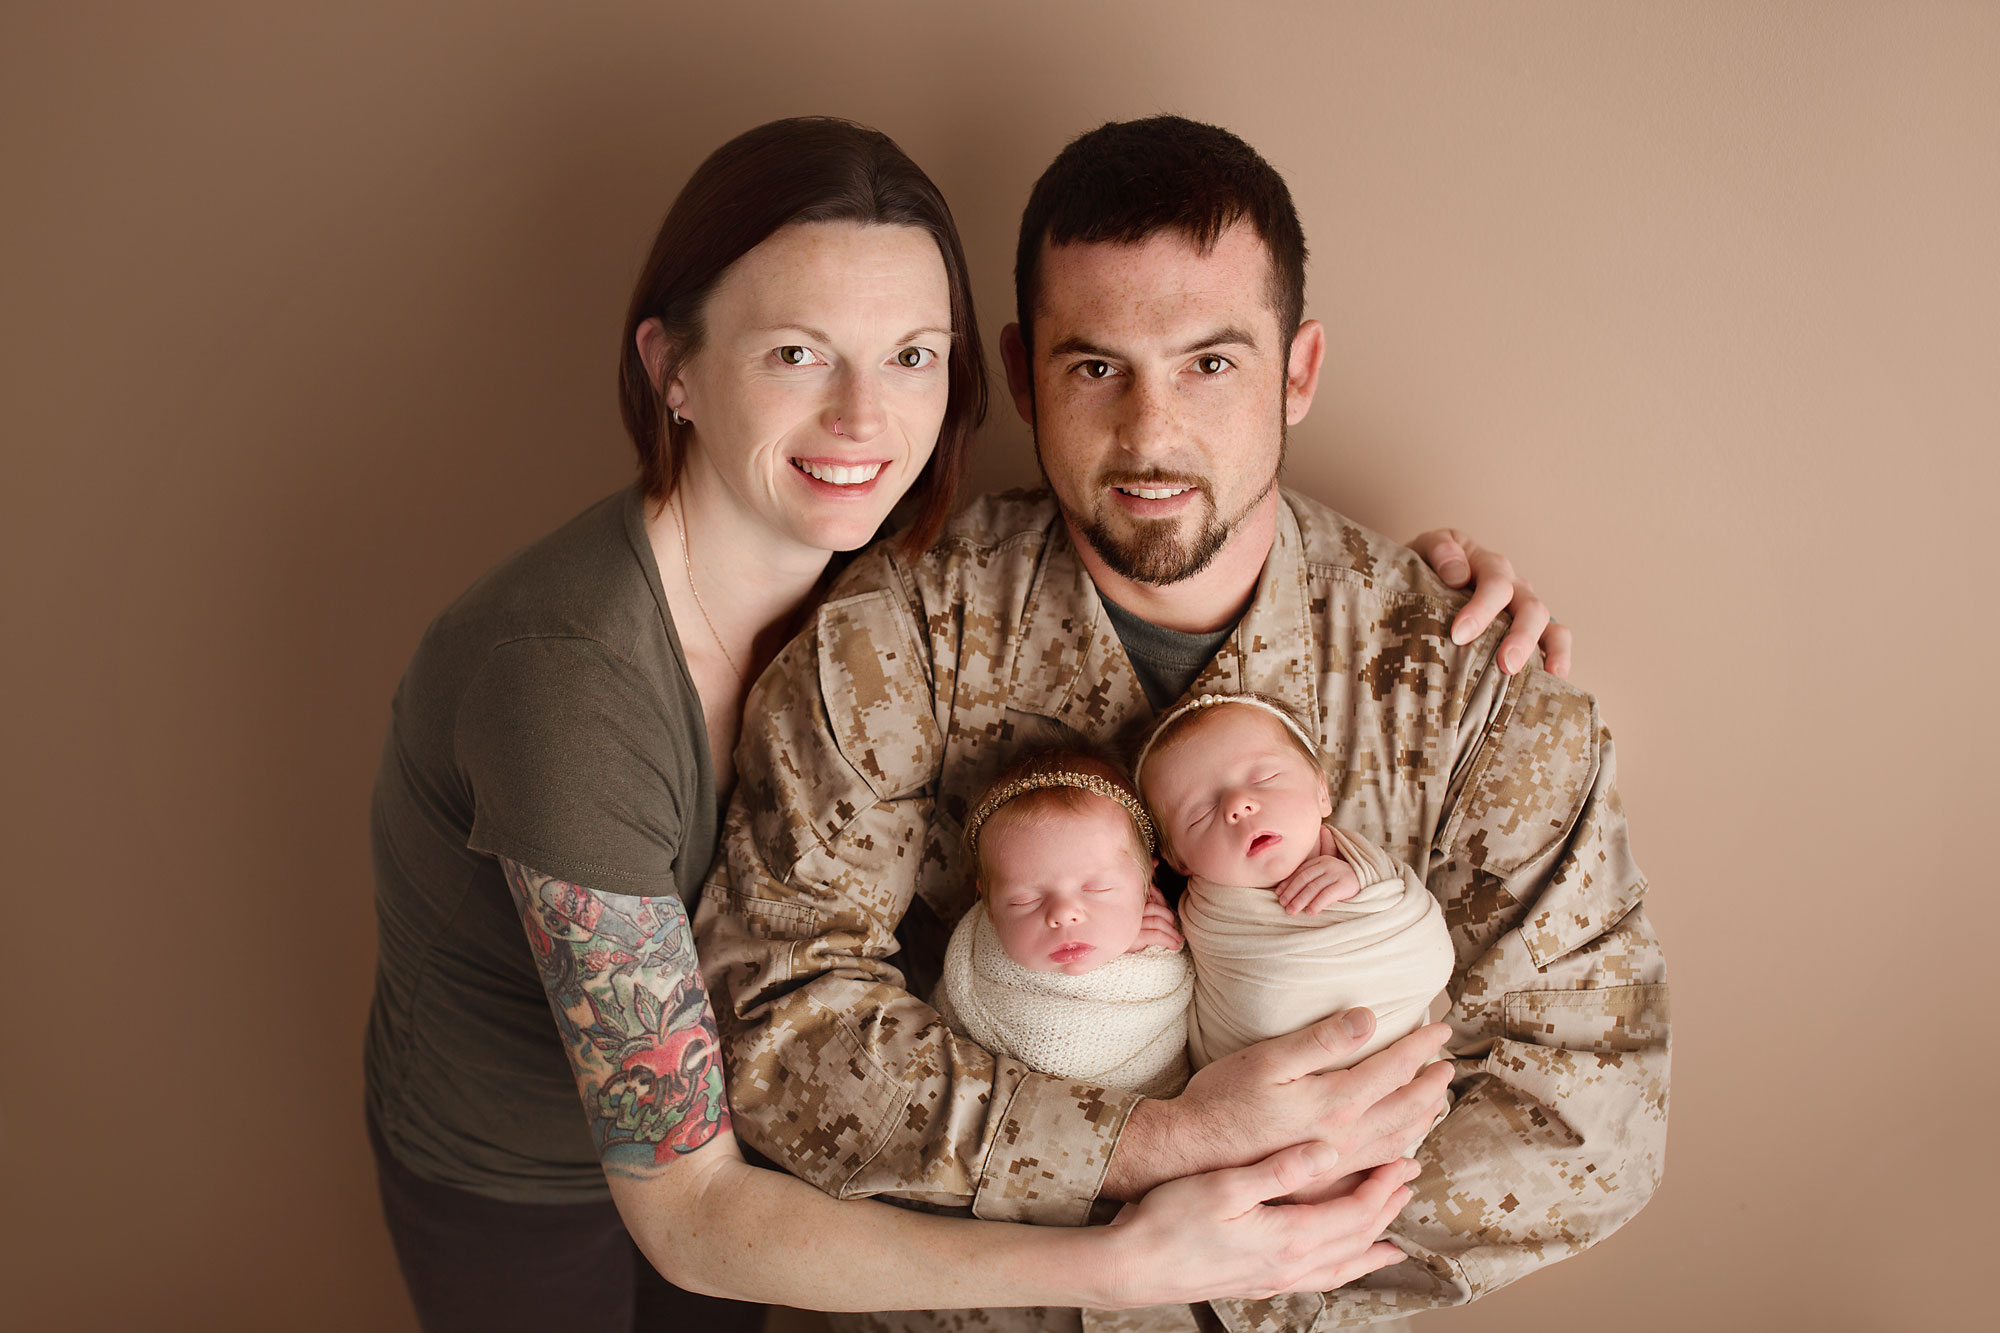 newborn police and military photo